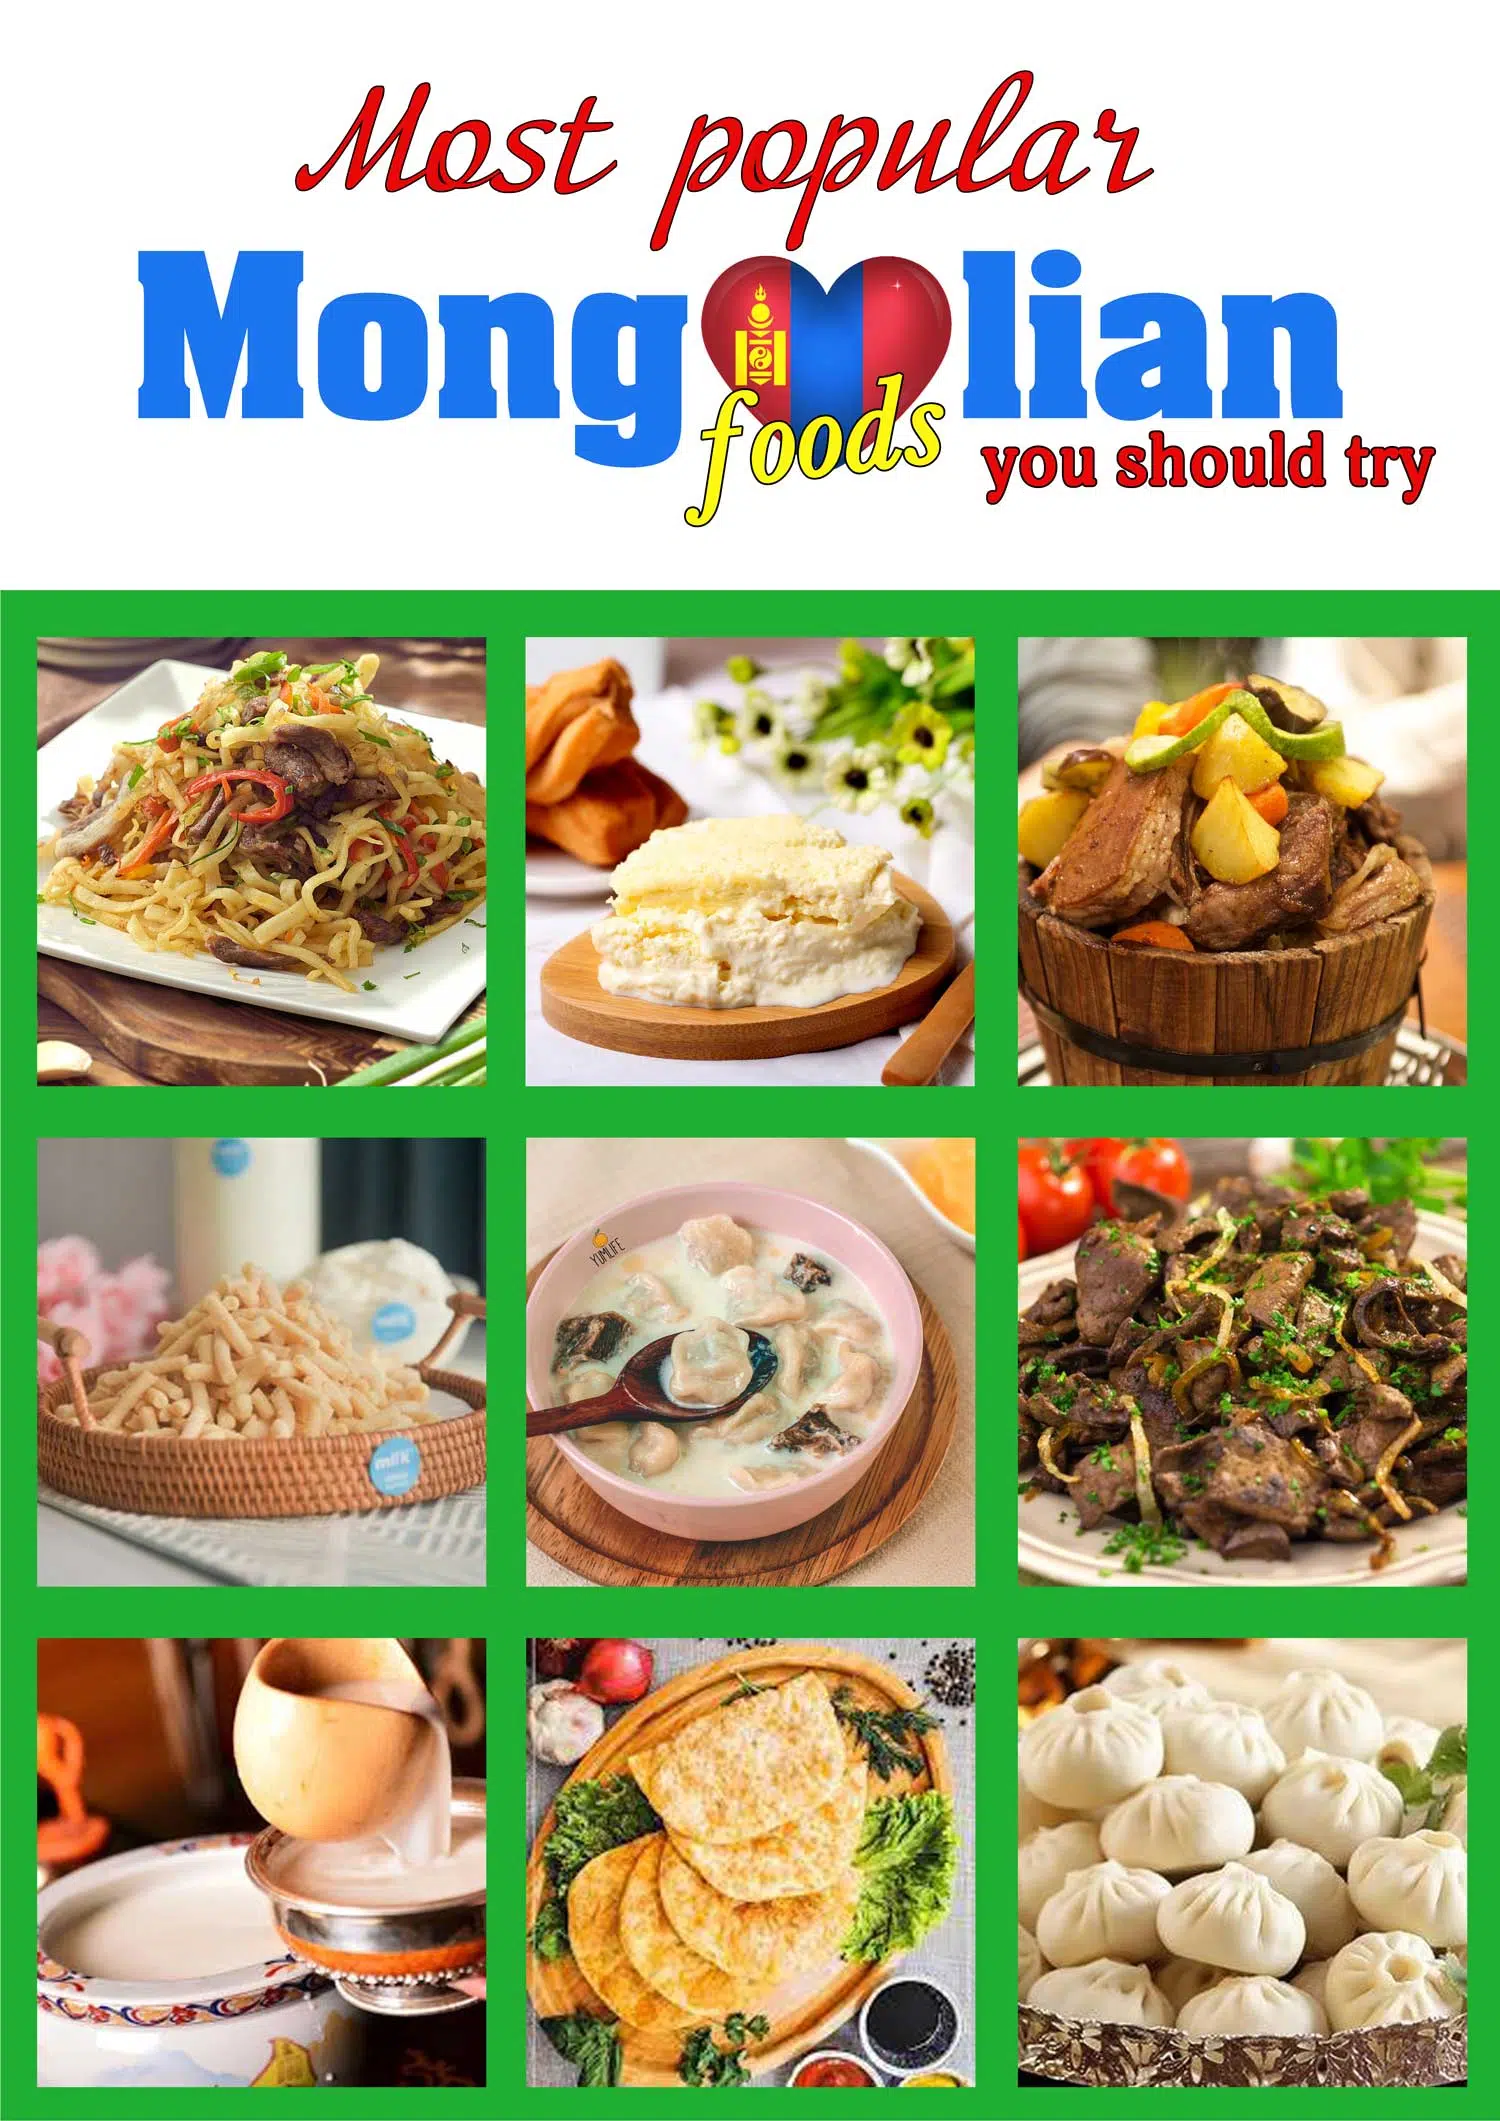 Mongolian foods.jpg